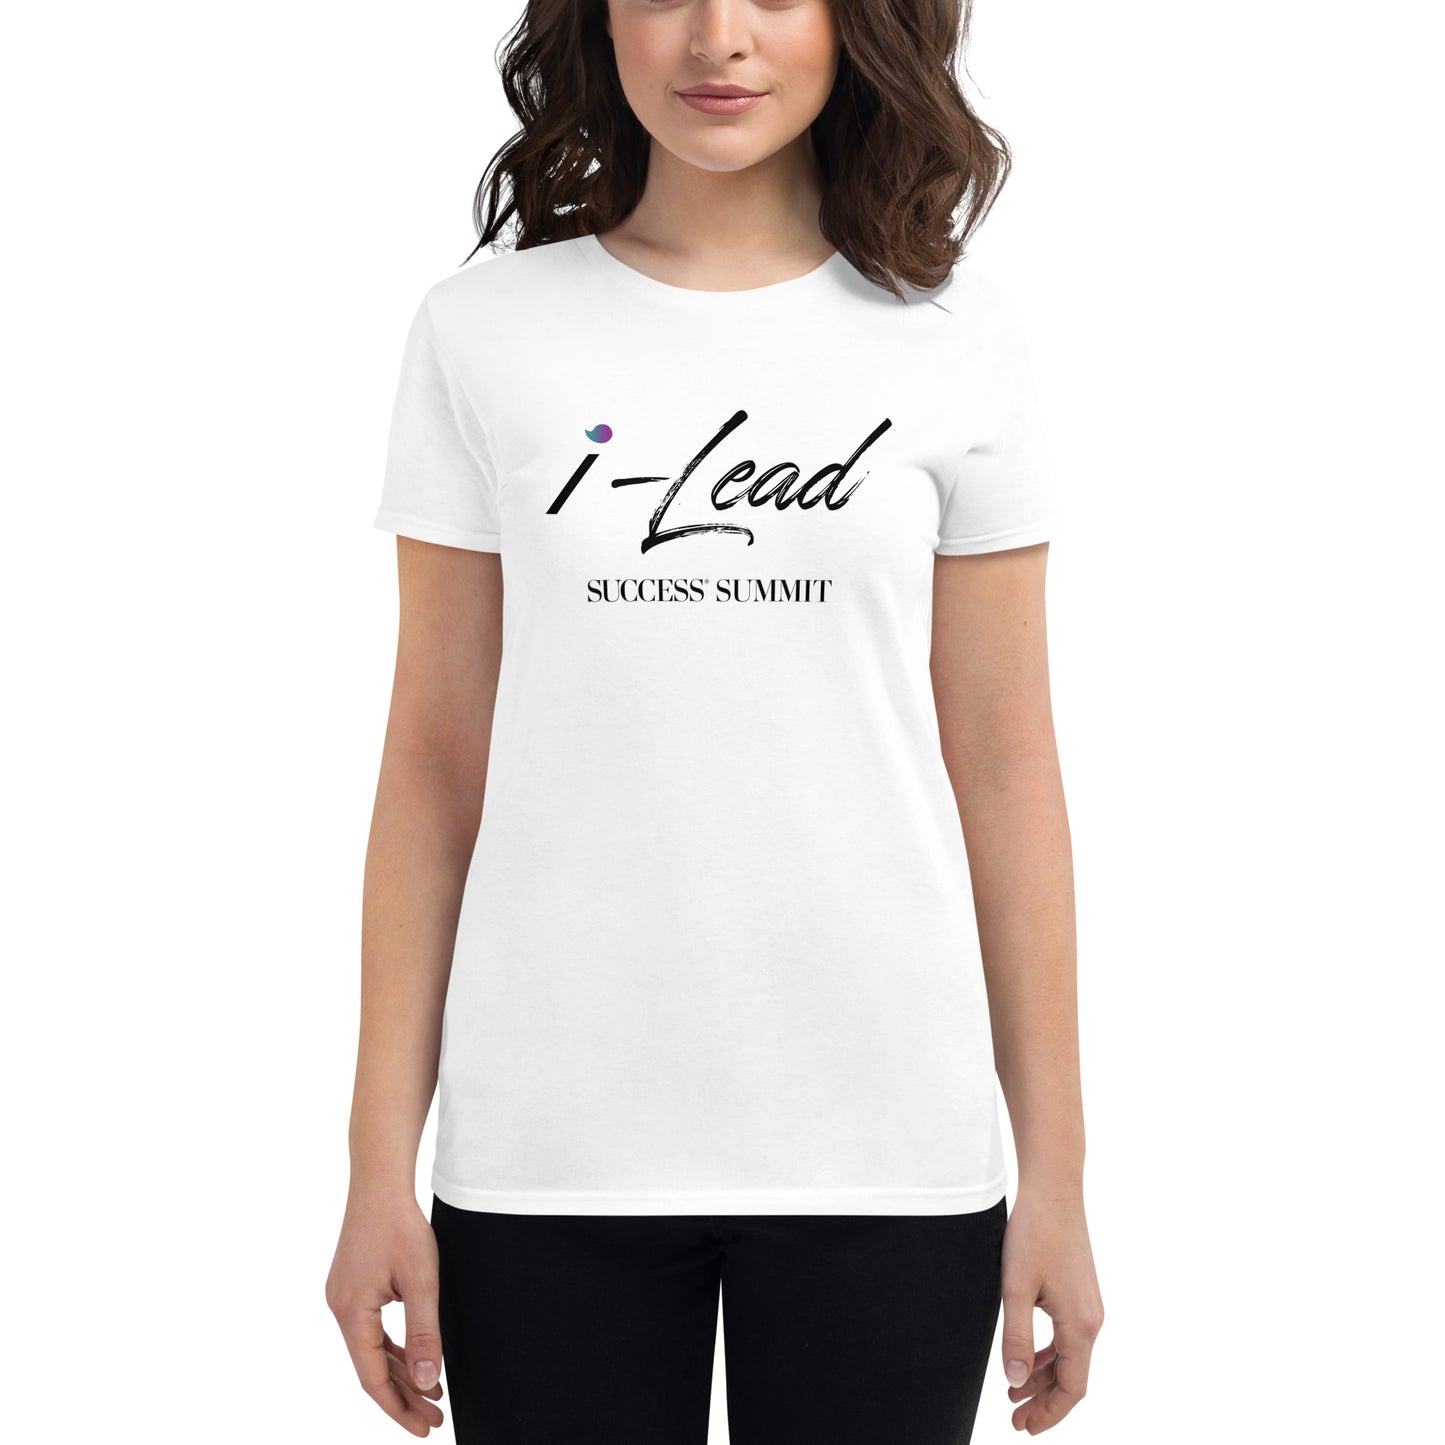 i-LEAD SUCCESS Summit women's short sleeve t-shirt